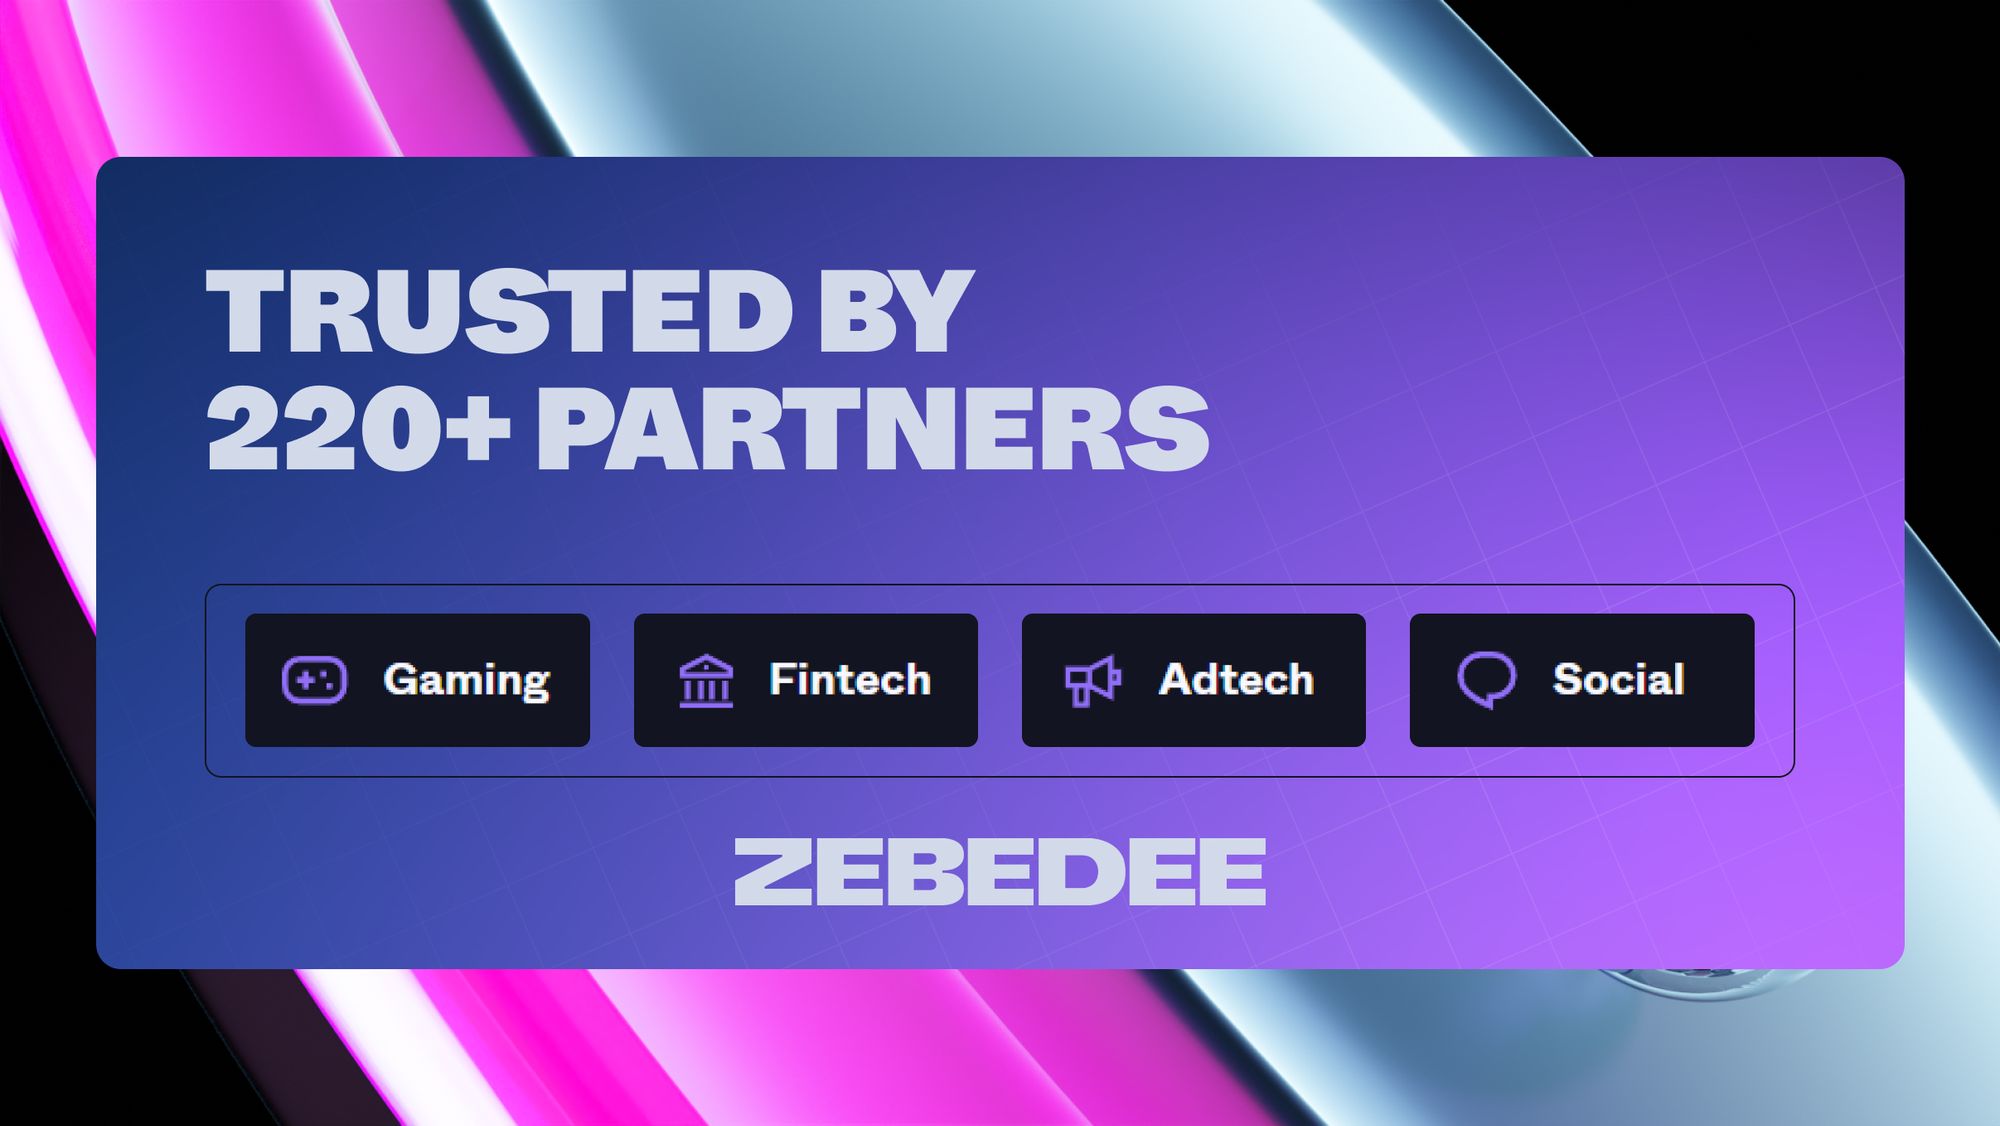 ZEBEDEE generally available – 220+ partners.